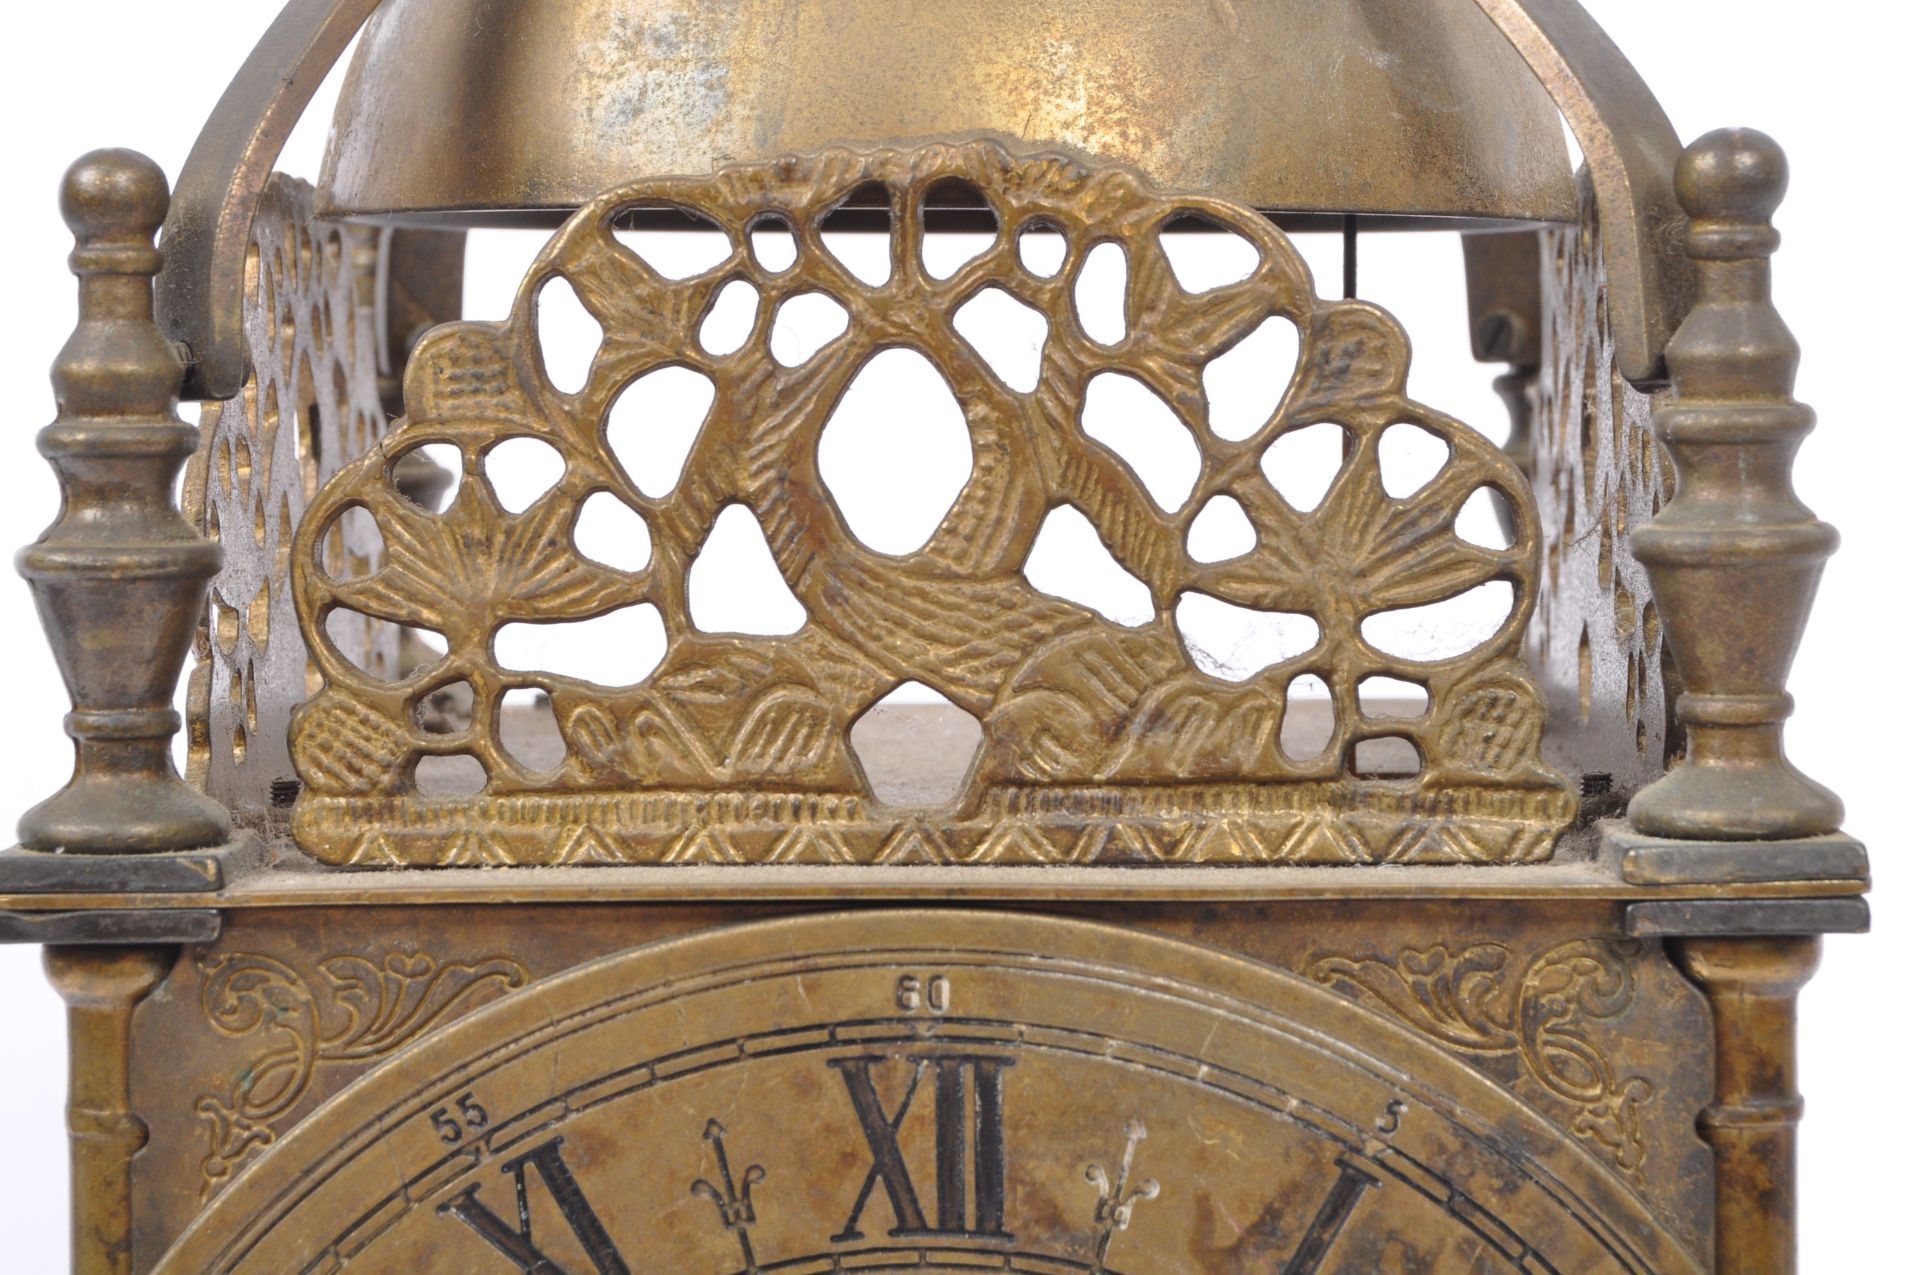 1900S 17TH CENTURY REVIVAL BRASS LANTERN MANTEL CLOCK - Image 7 of 7